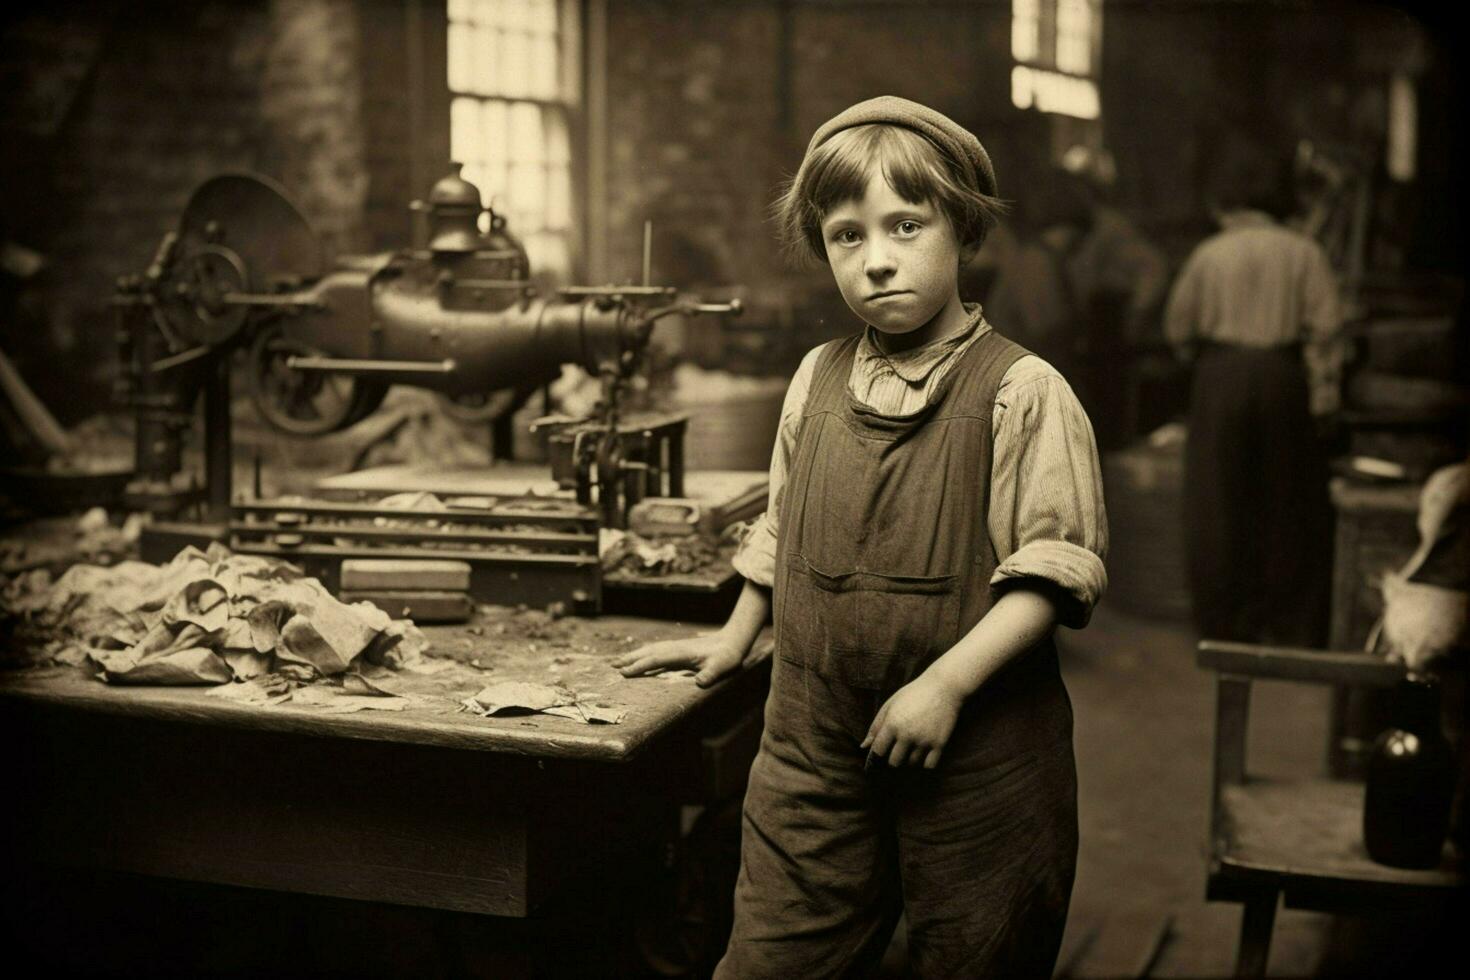 fabriek kind arbeider wijnoogst 1800 jaar foto